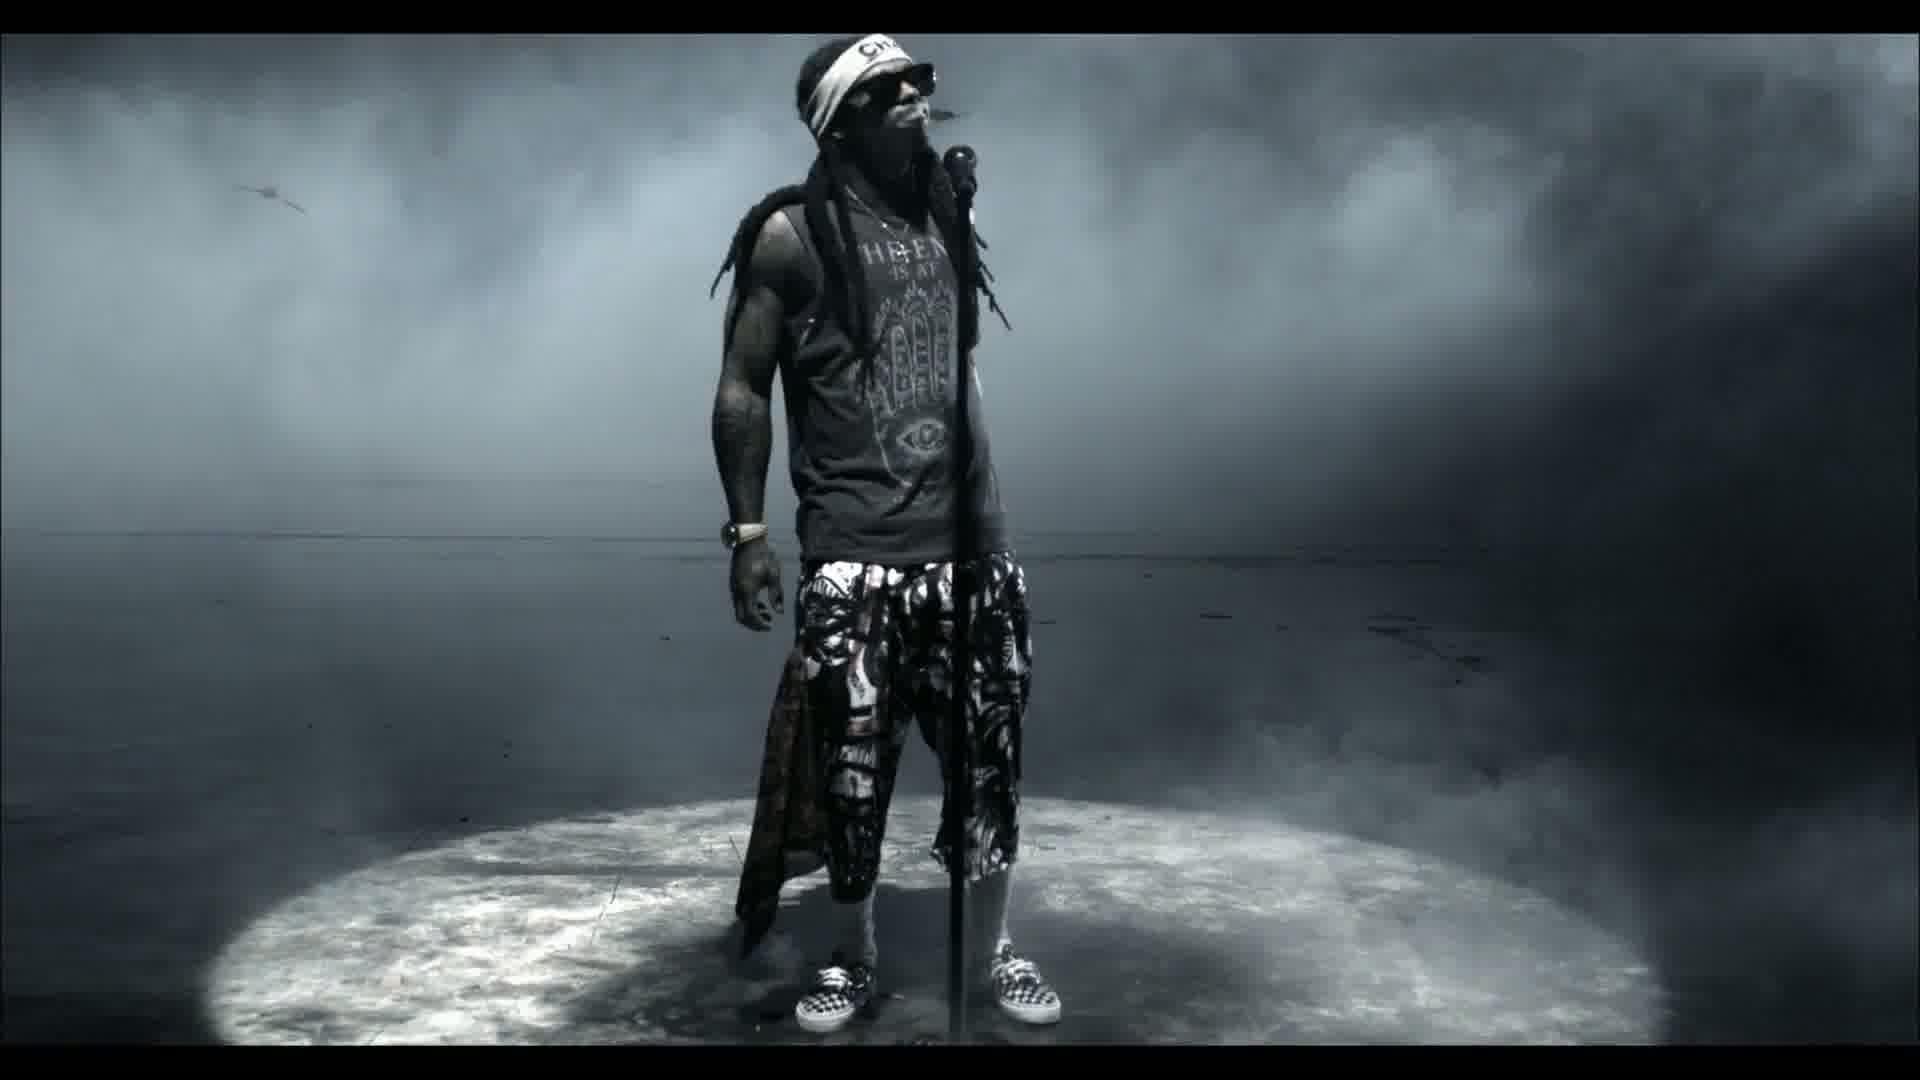 Lil Wayne Wallpapers